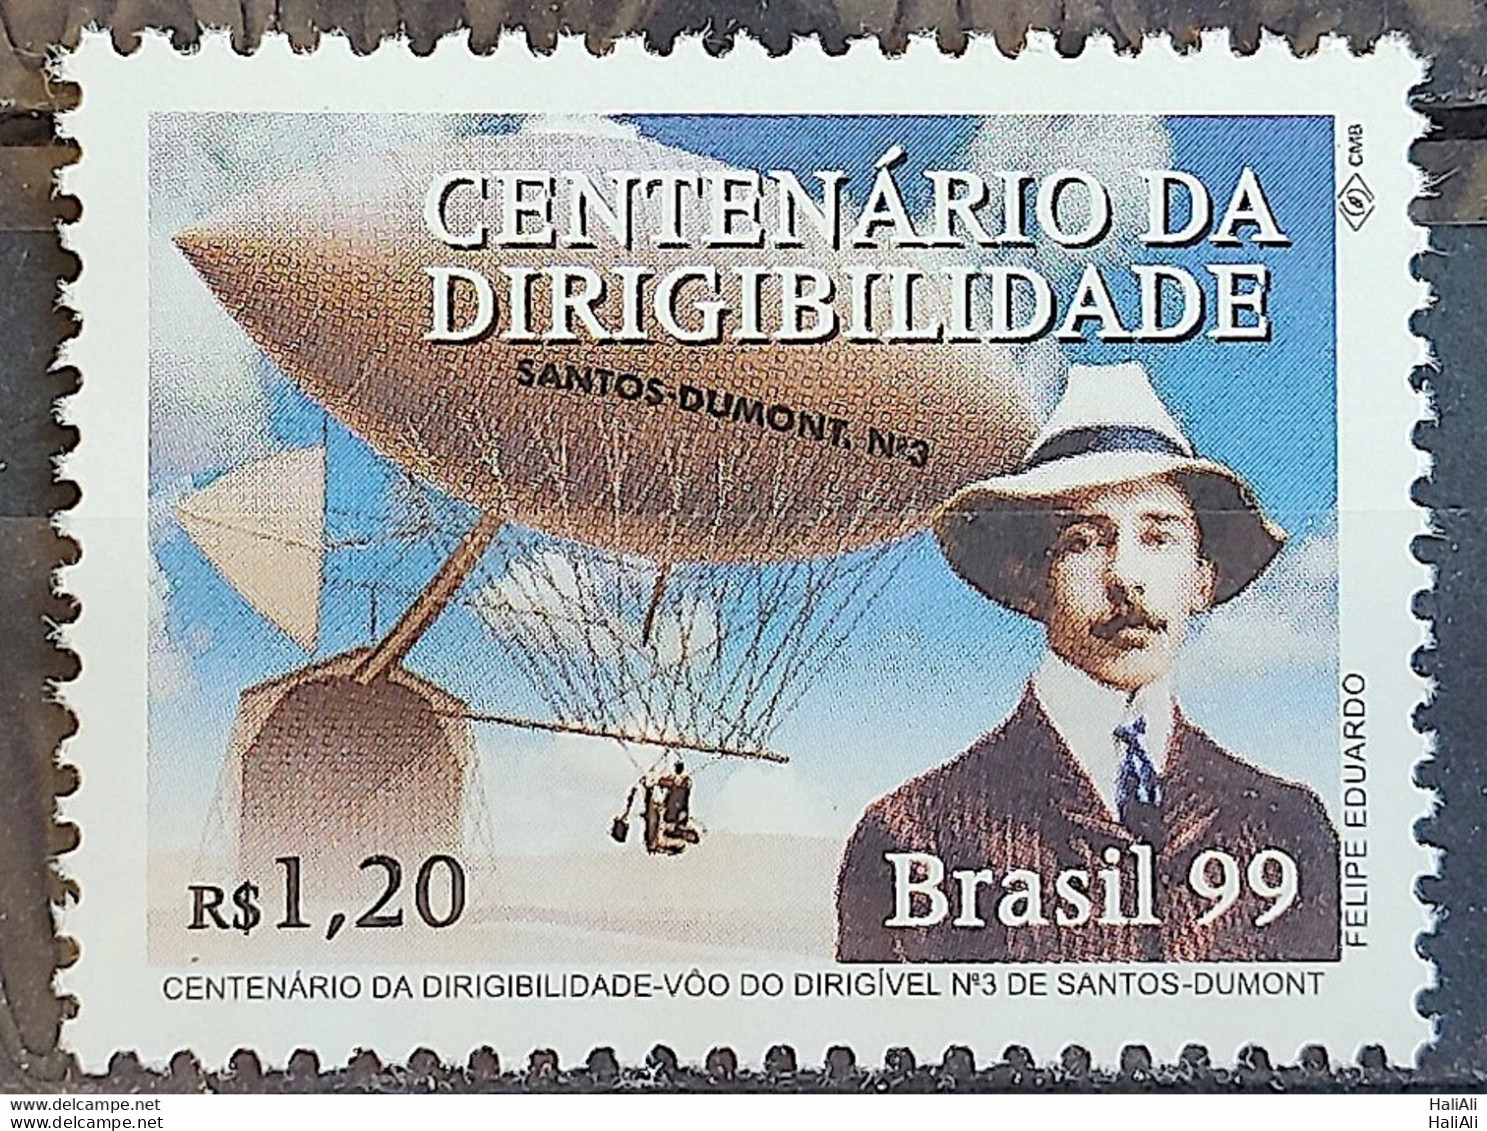 C 2202 Brazil Stamp Direct Santos Dumont Airplane Aviation 1999 - Unused Stamps